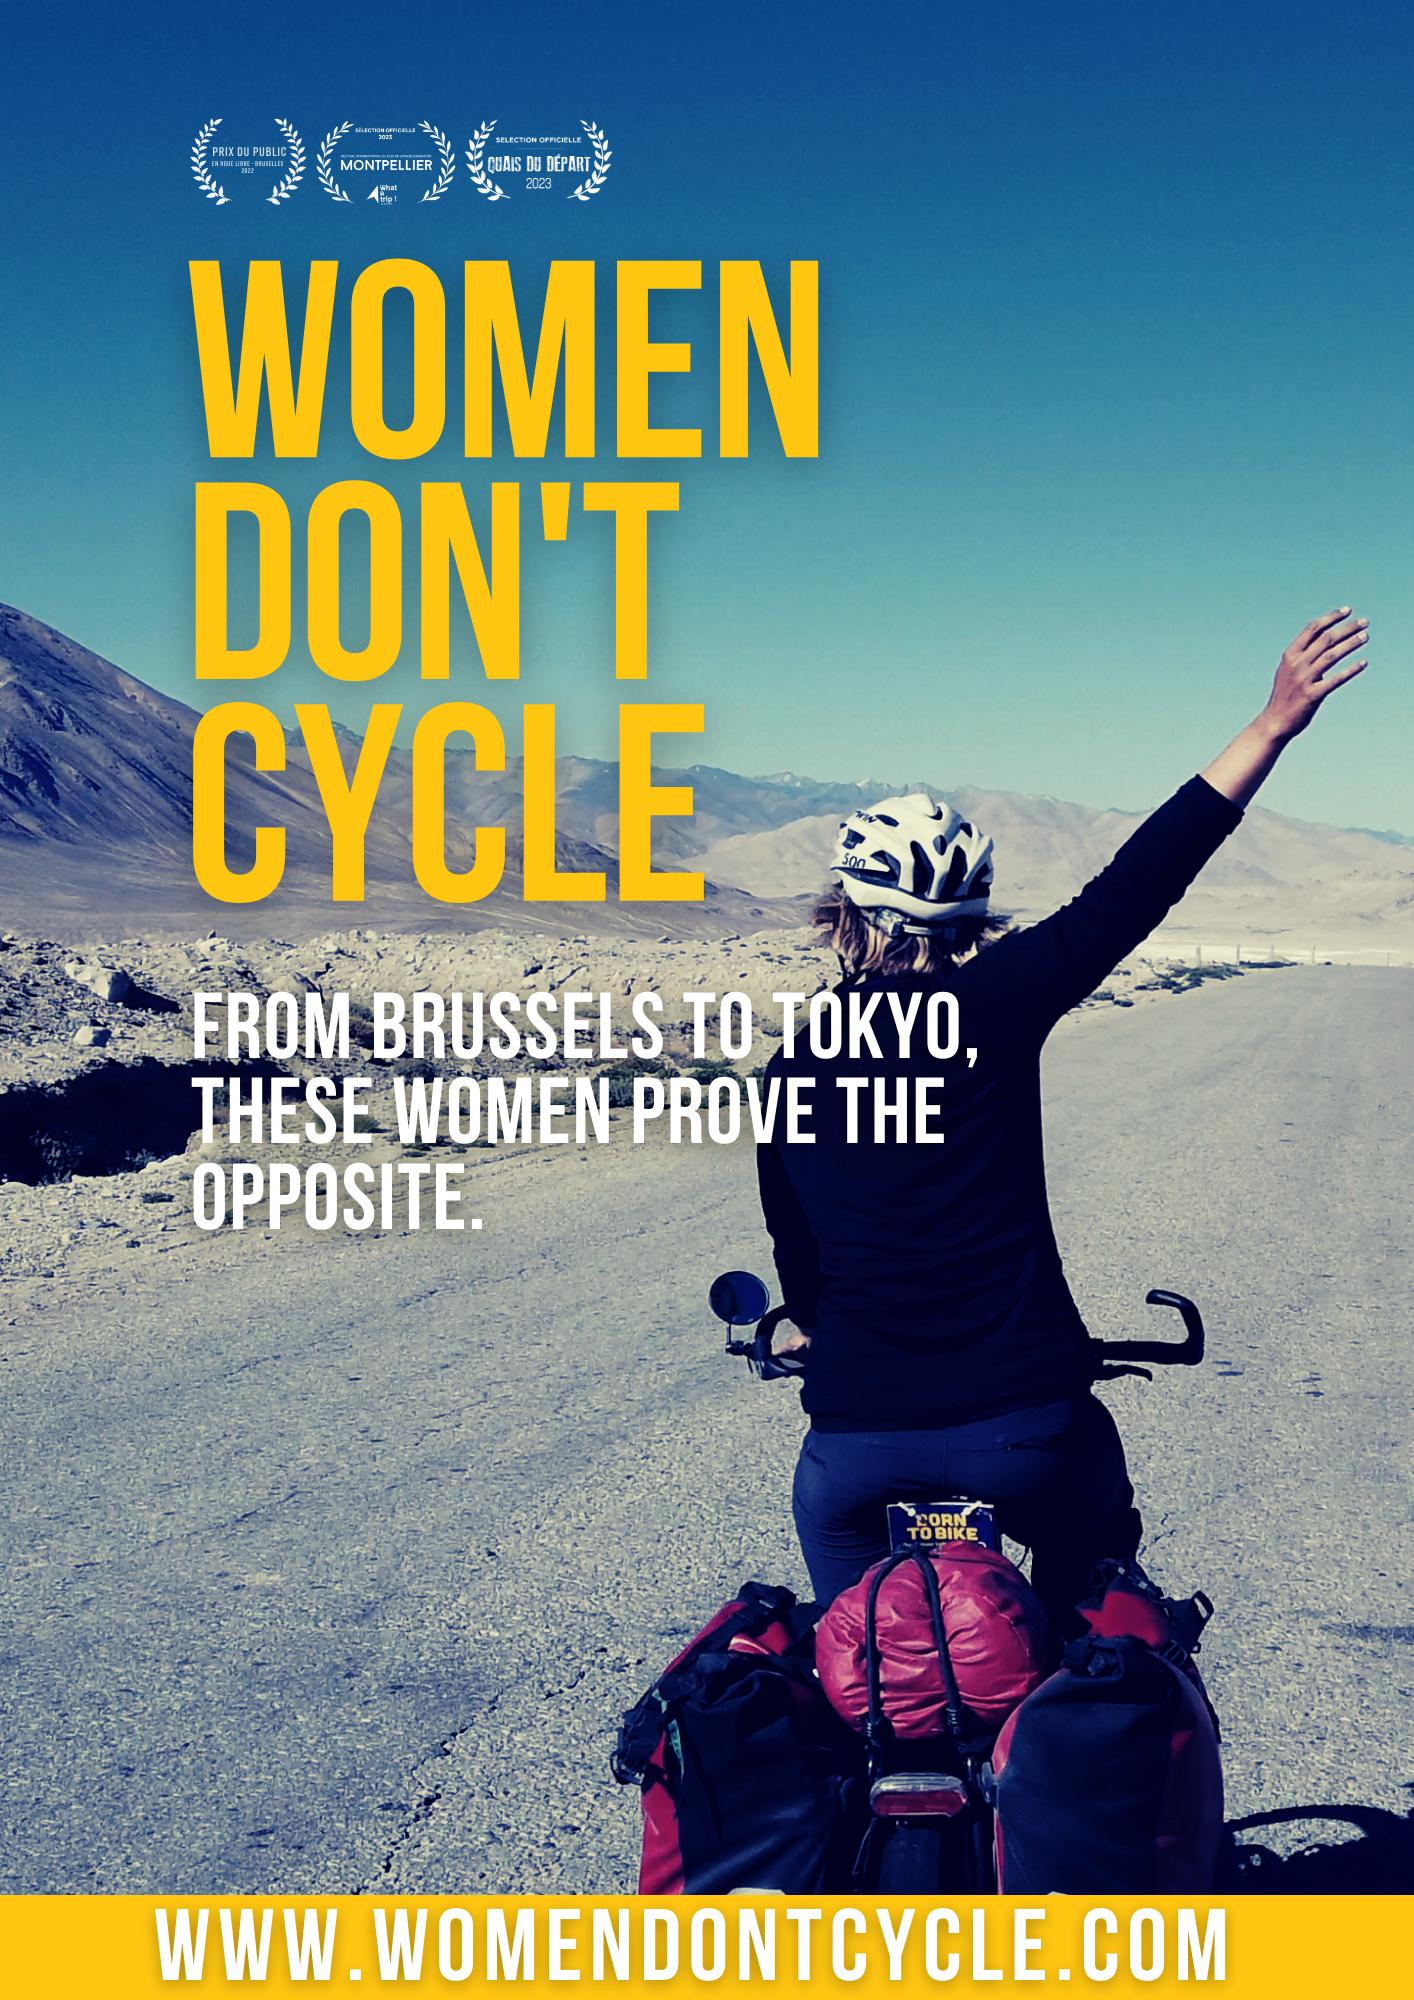 WOMEN DON'T CYCLE